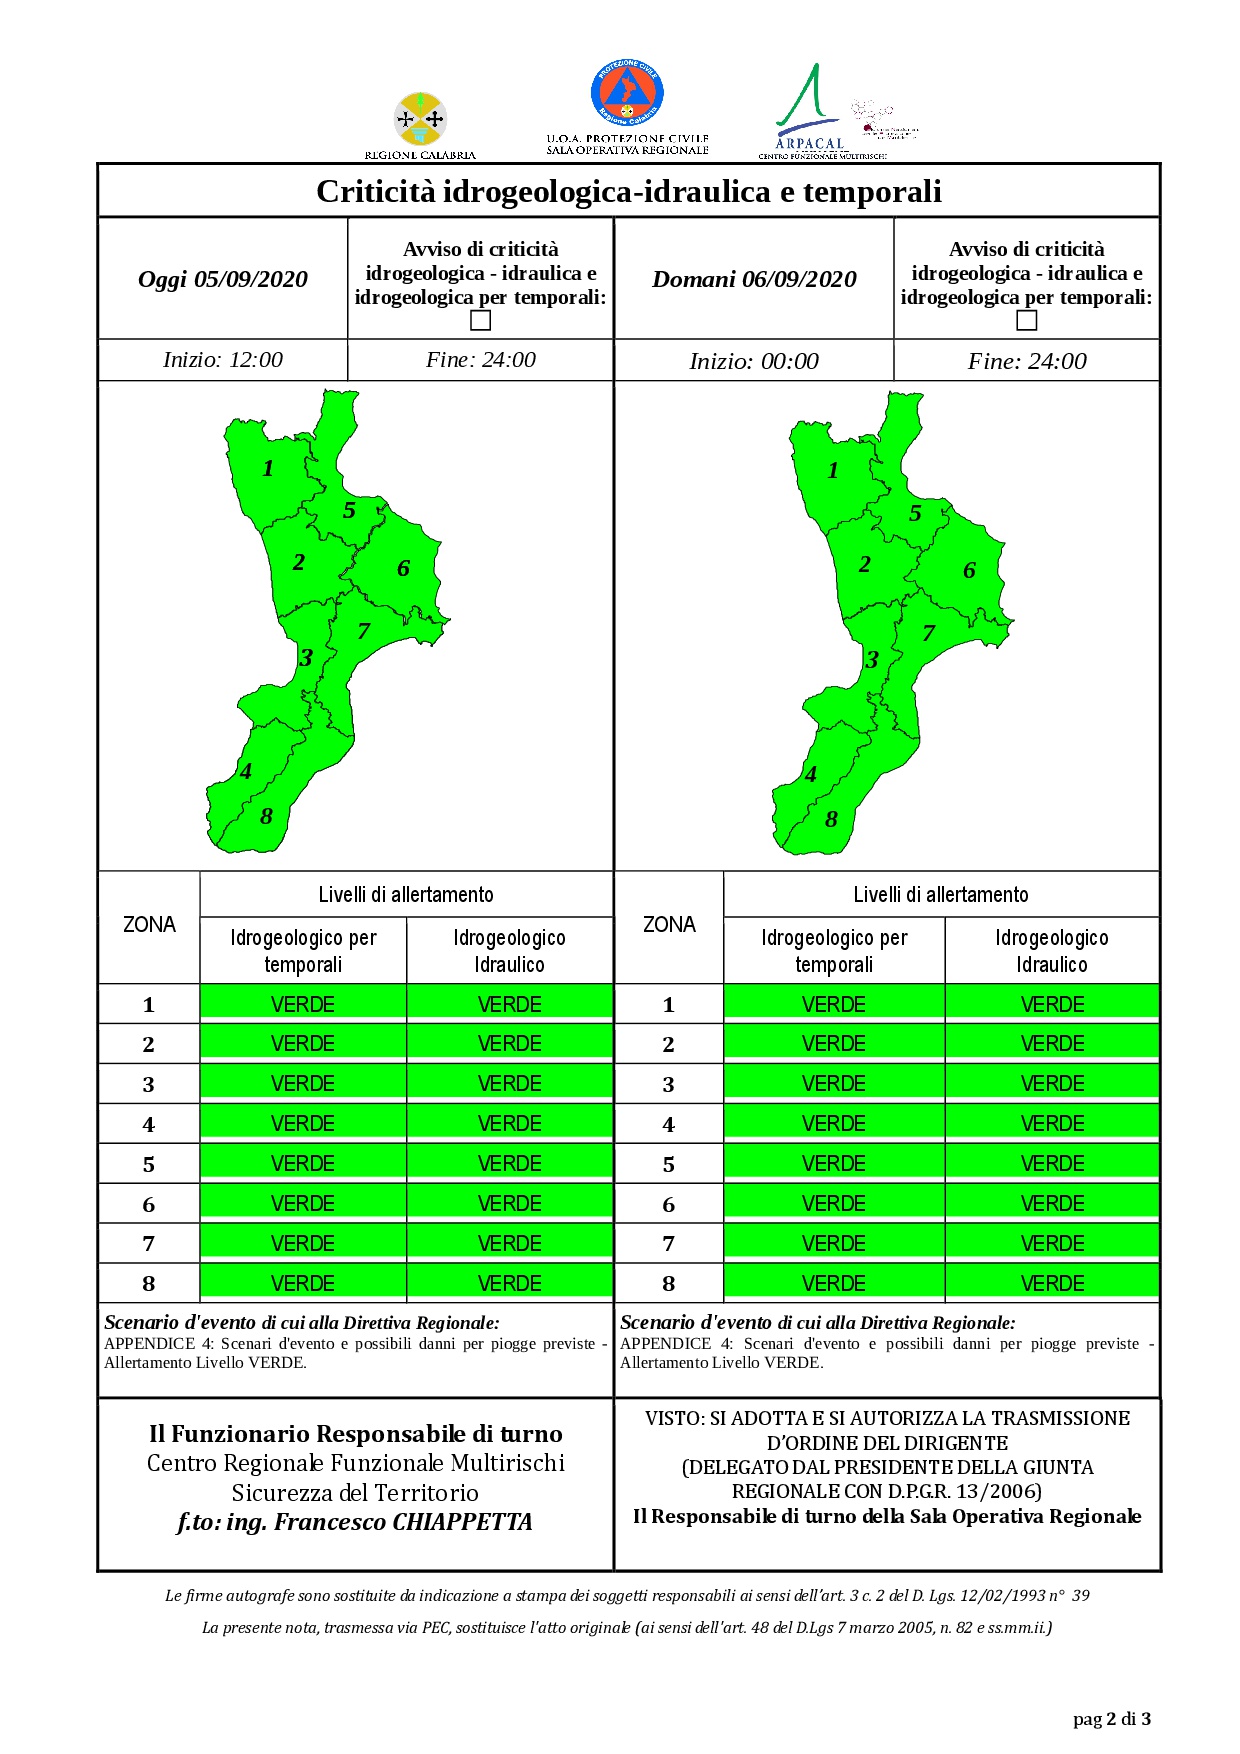 Criticità idrogeologica-idraulica e temporali in Calabria 05-09-2020